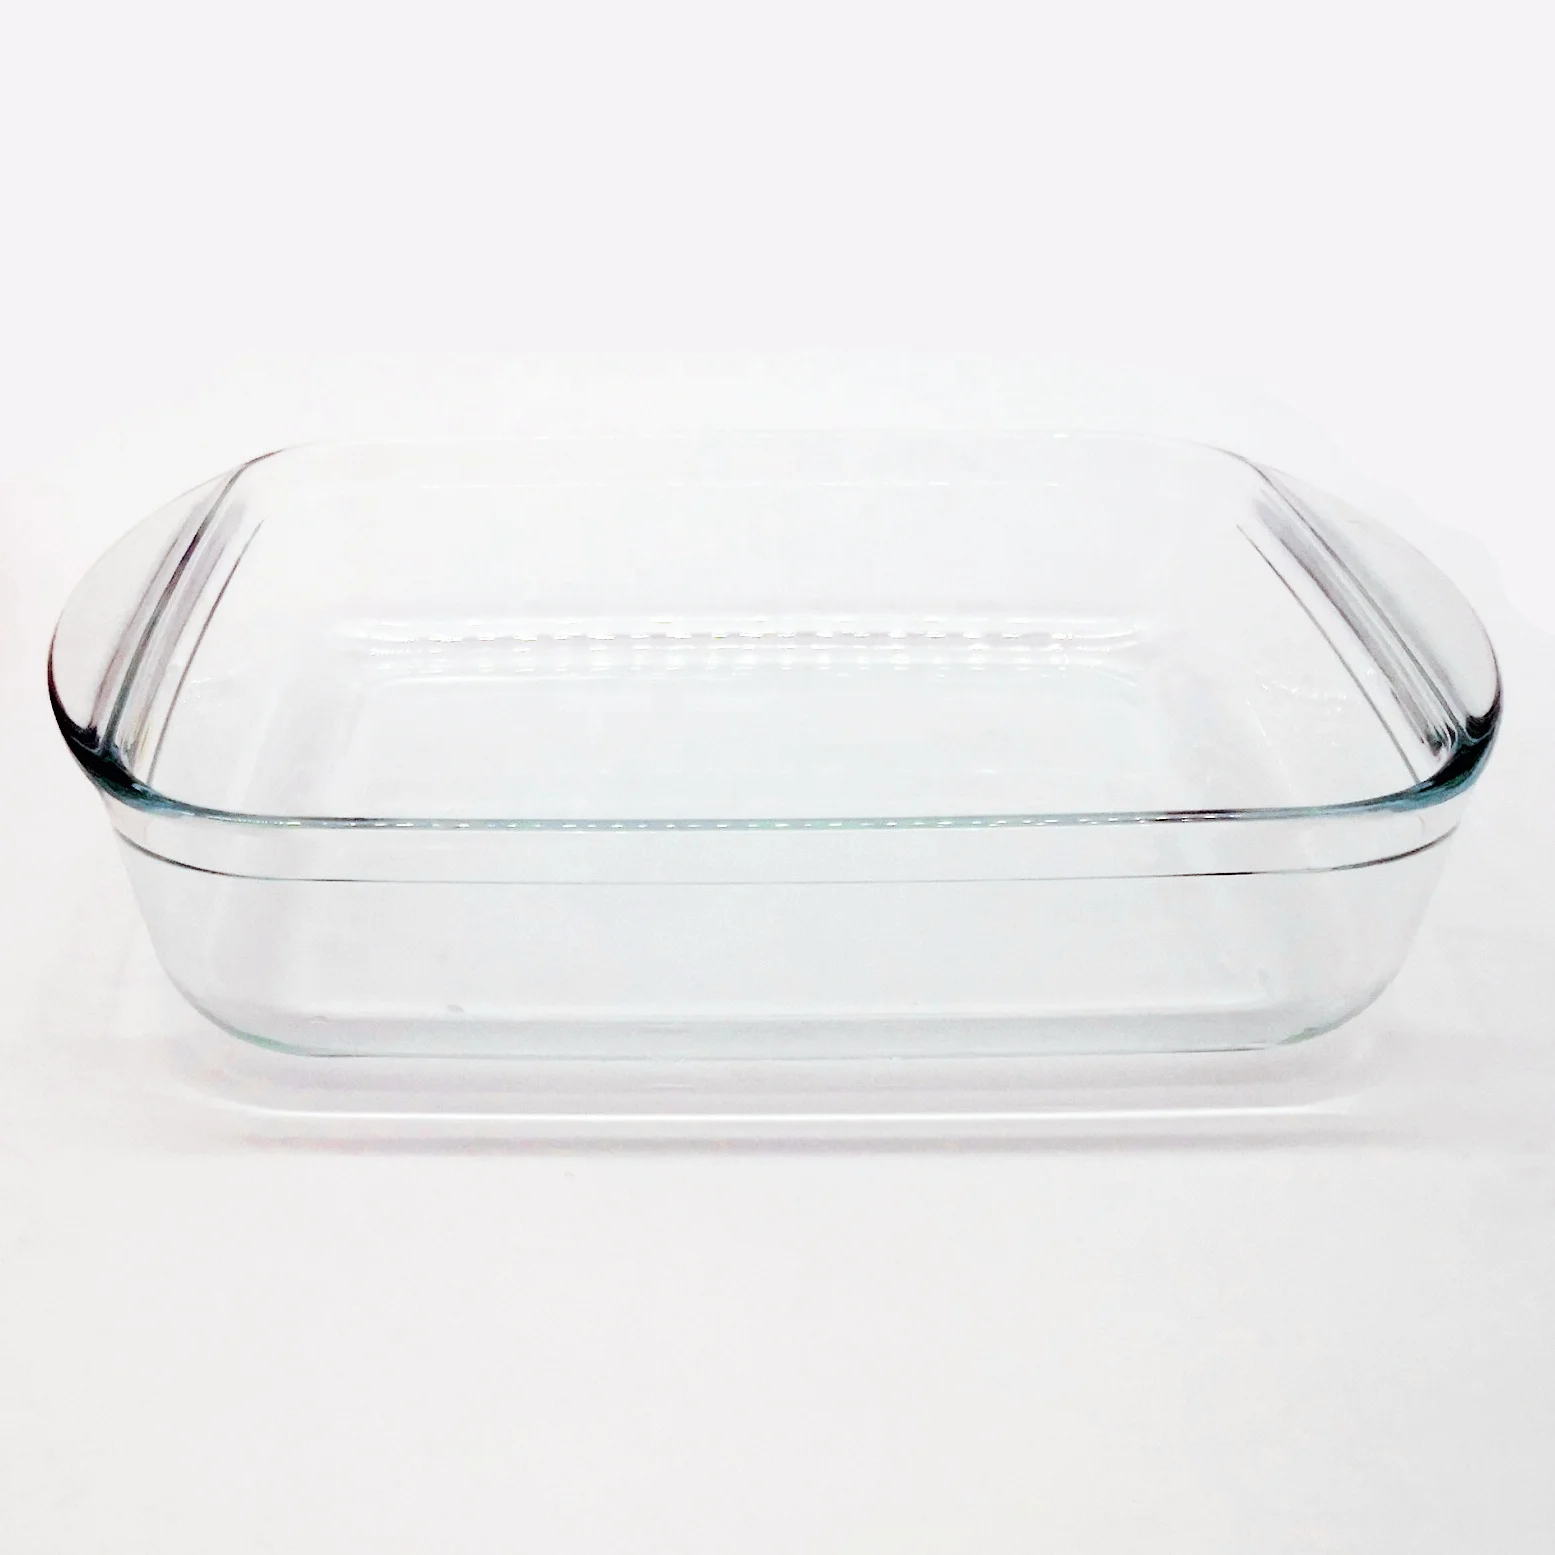 
Eco-Friendly Heat-resisting Square glass baking dish tray microwave safe borosilicate glass bakeware 